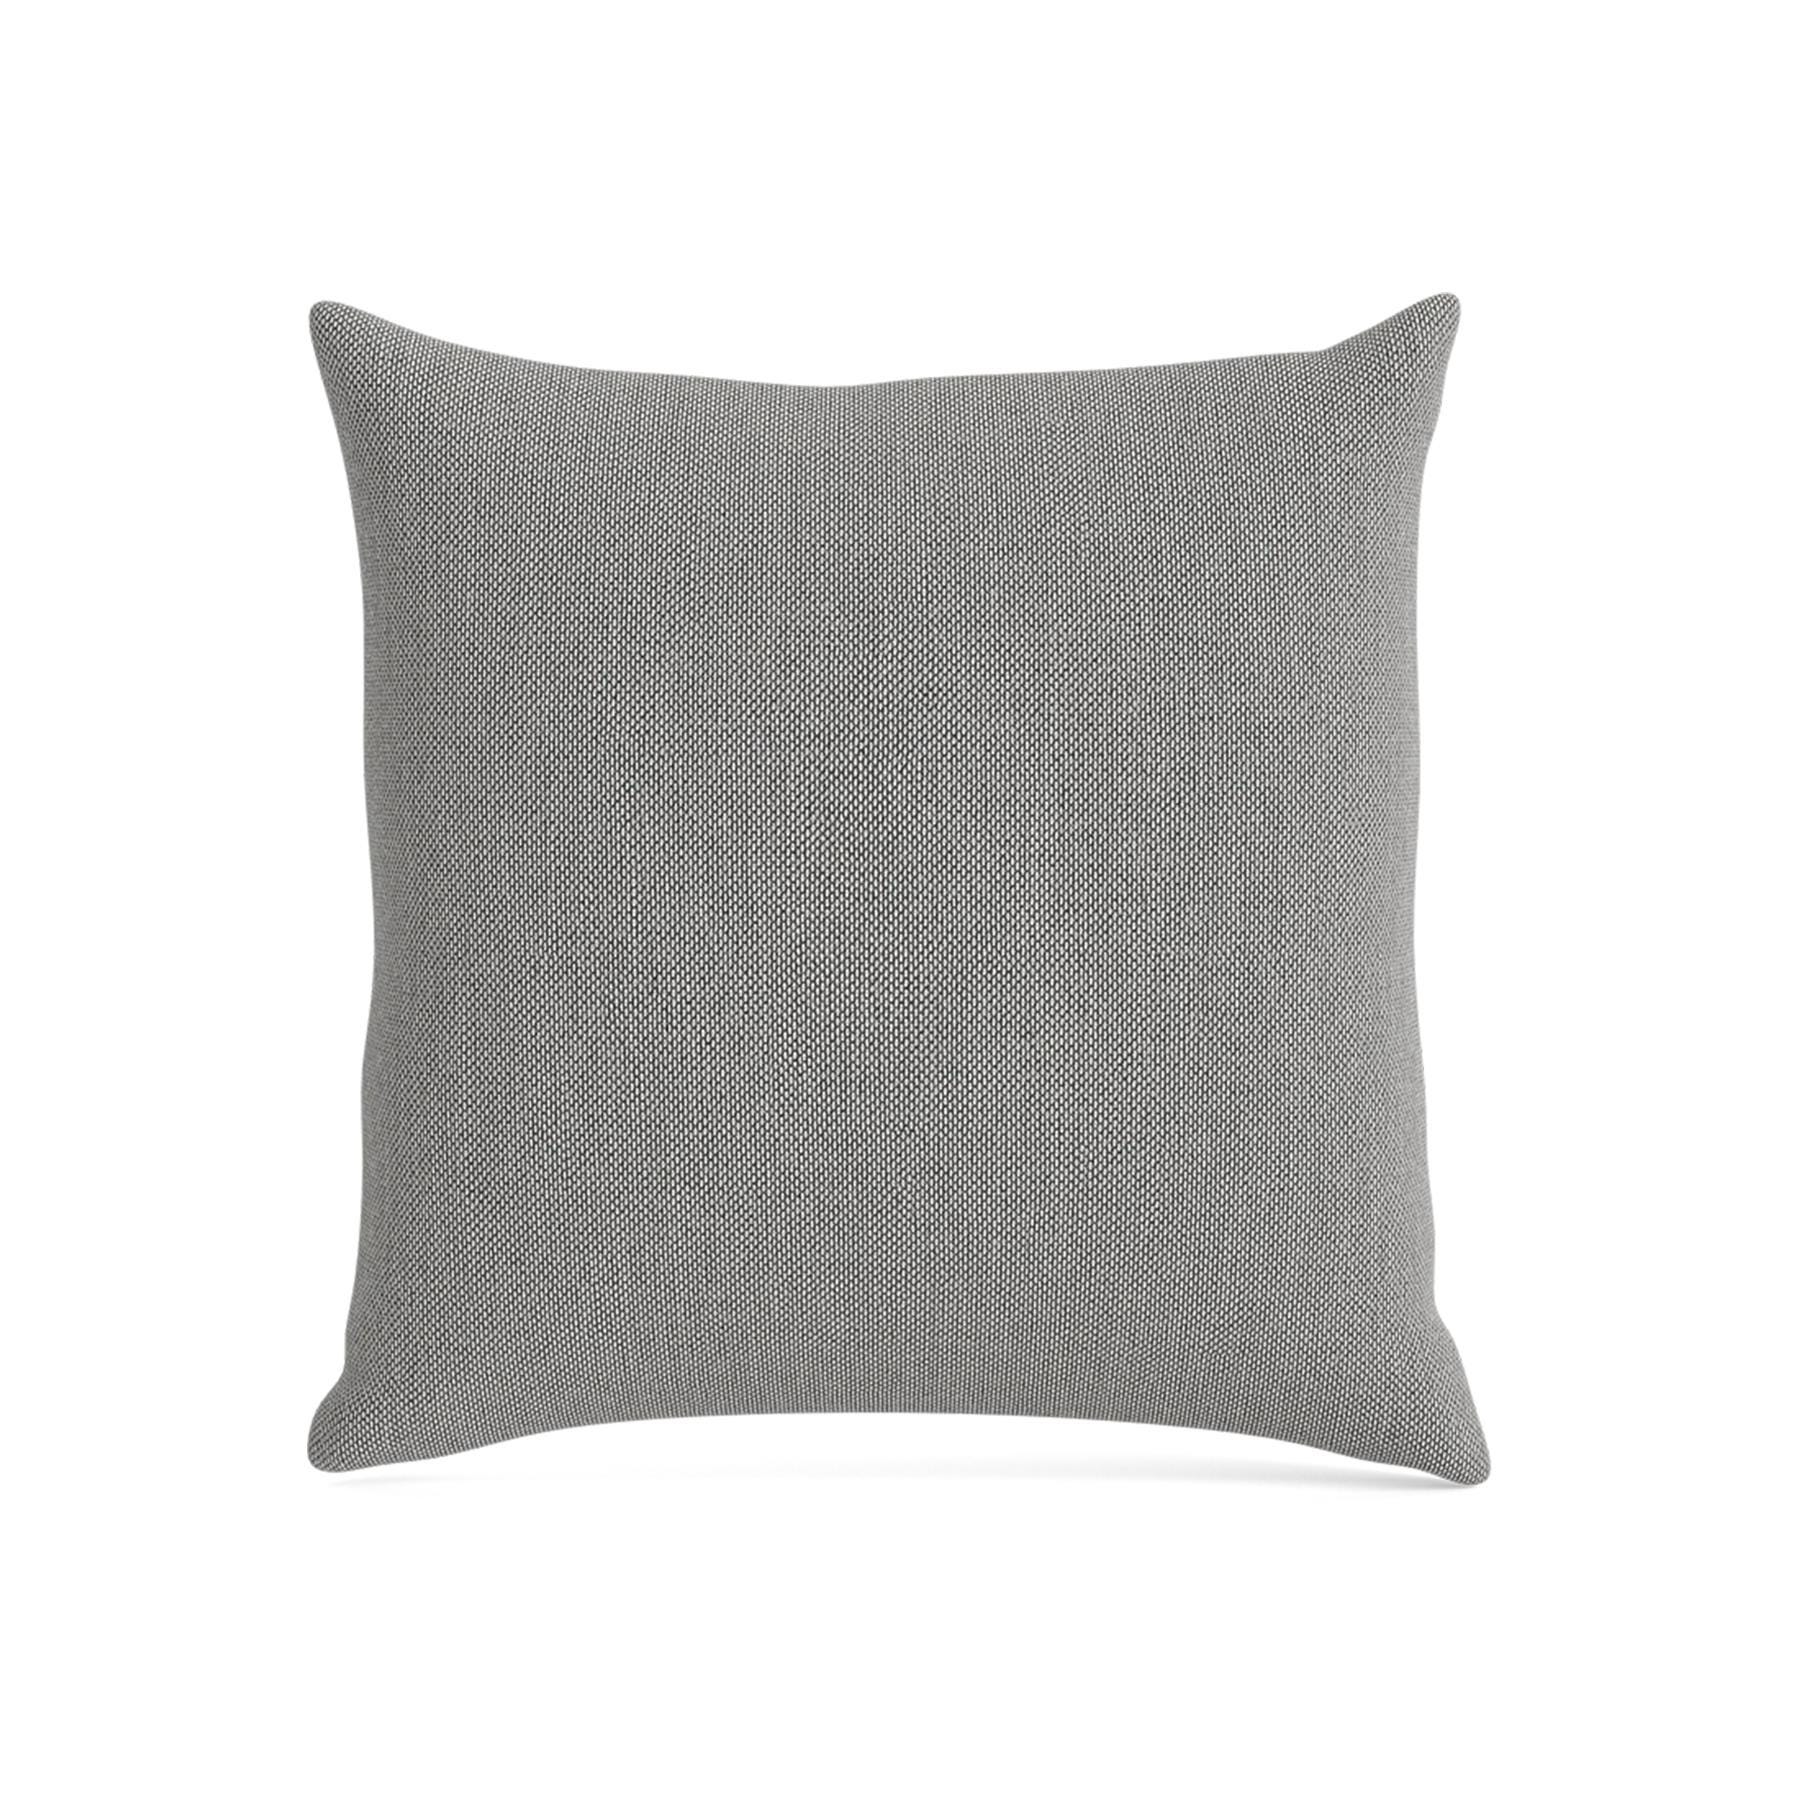 Make Nordic Pillow 50cmx50cm Rewool 128 Down And Fibers Grey